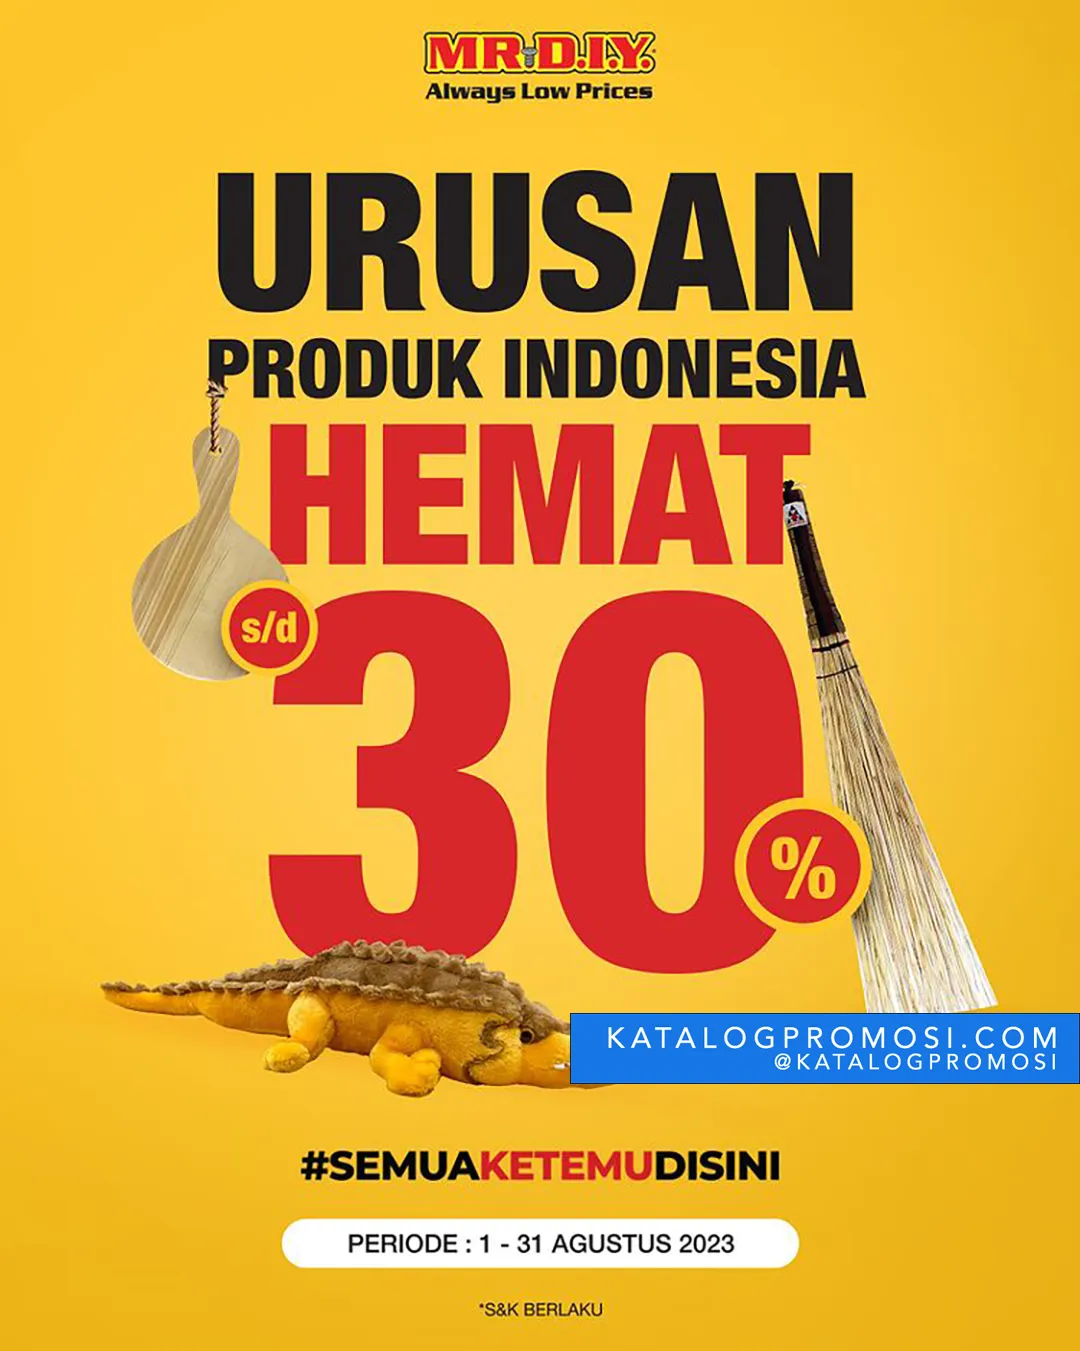 PROMO MR. DIY URUSAN PRODUK INDONESIA - HEMAT hingga 30%